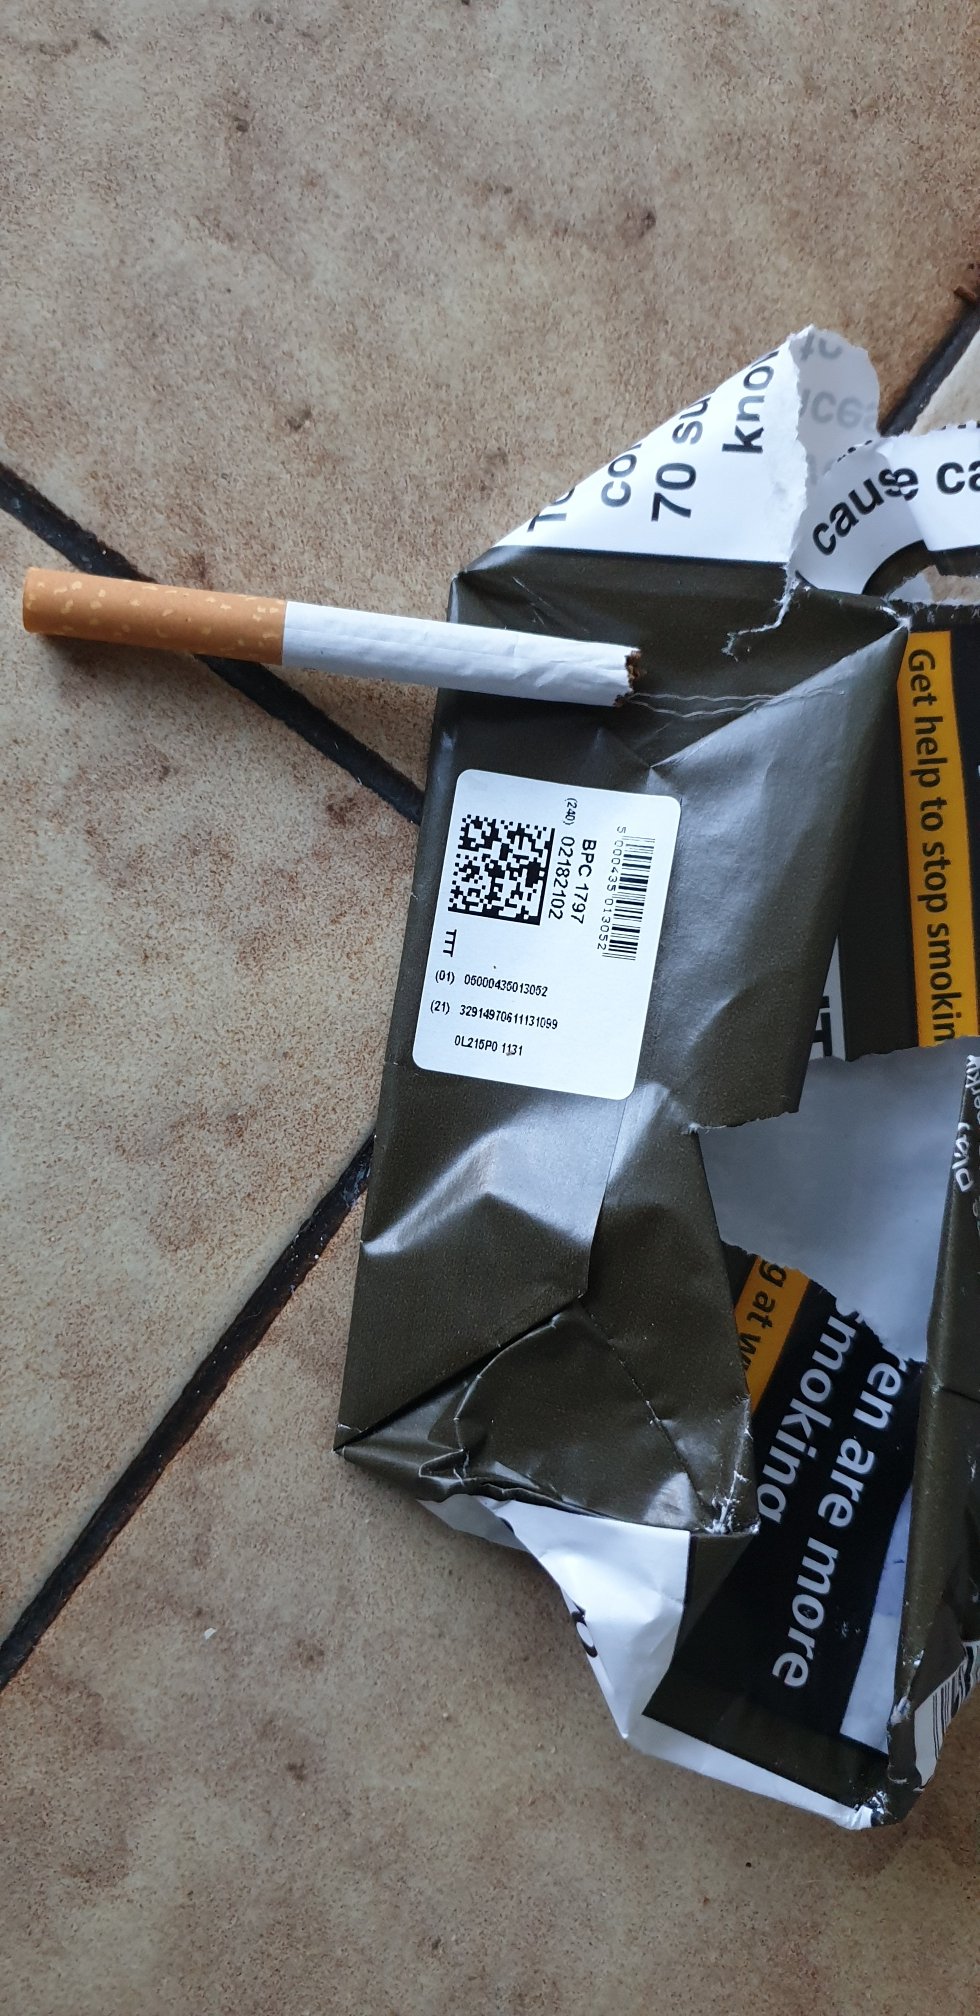 John Player Cigarettes complaint Plastic strands found in cigarette